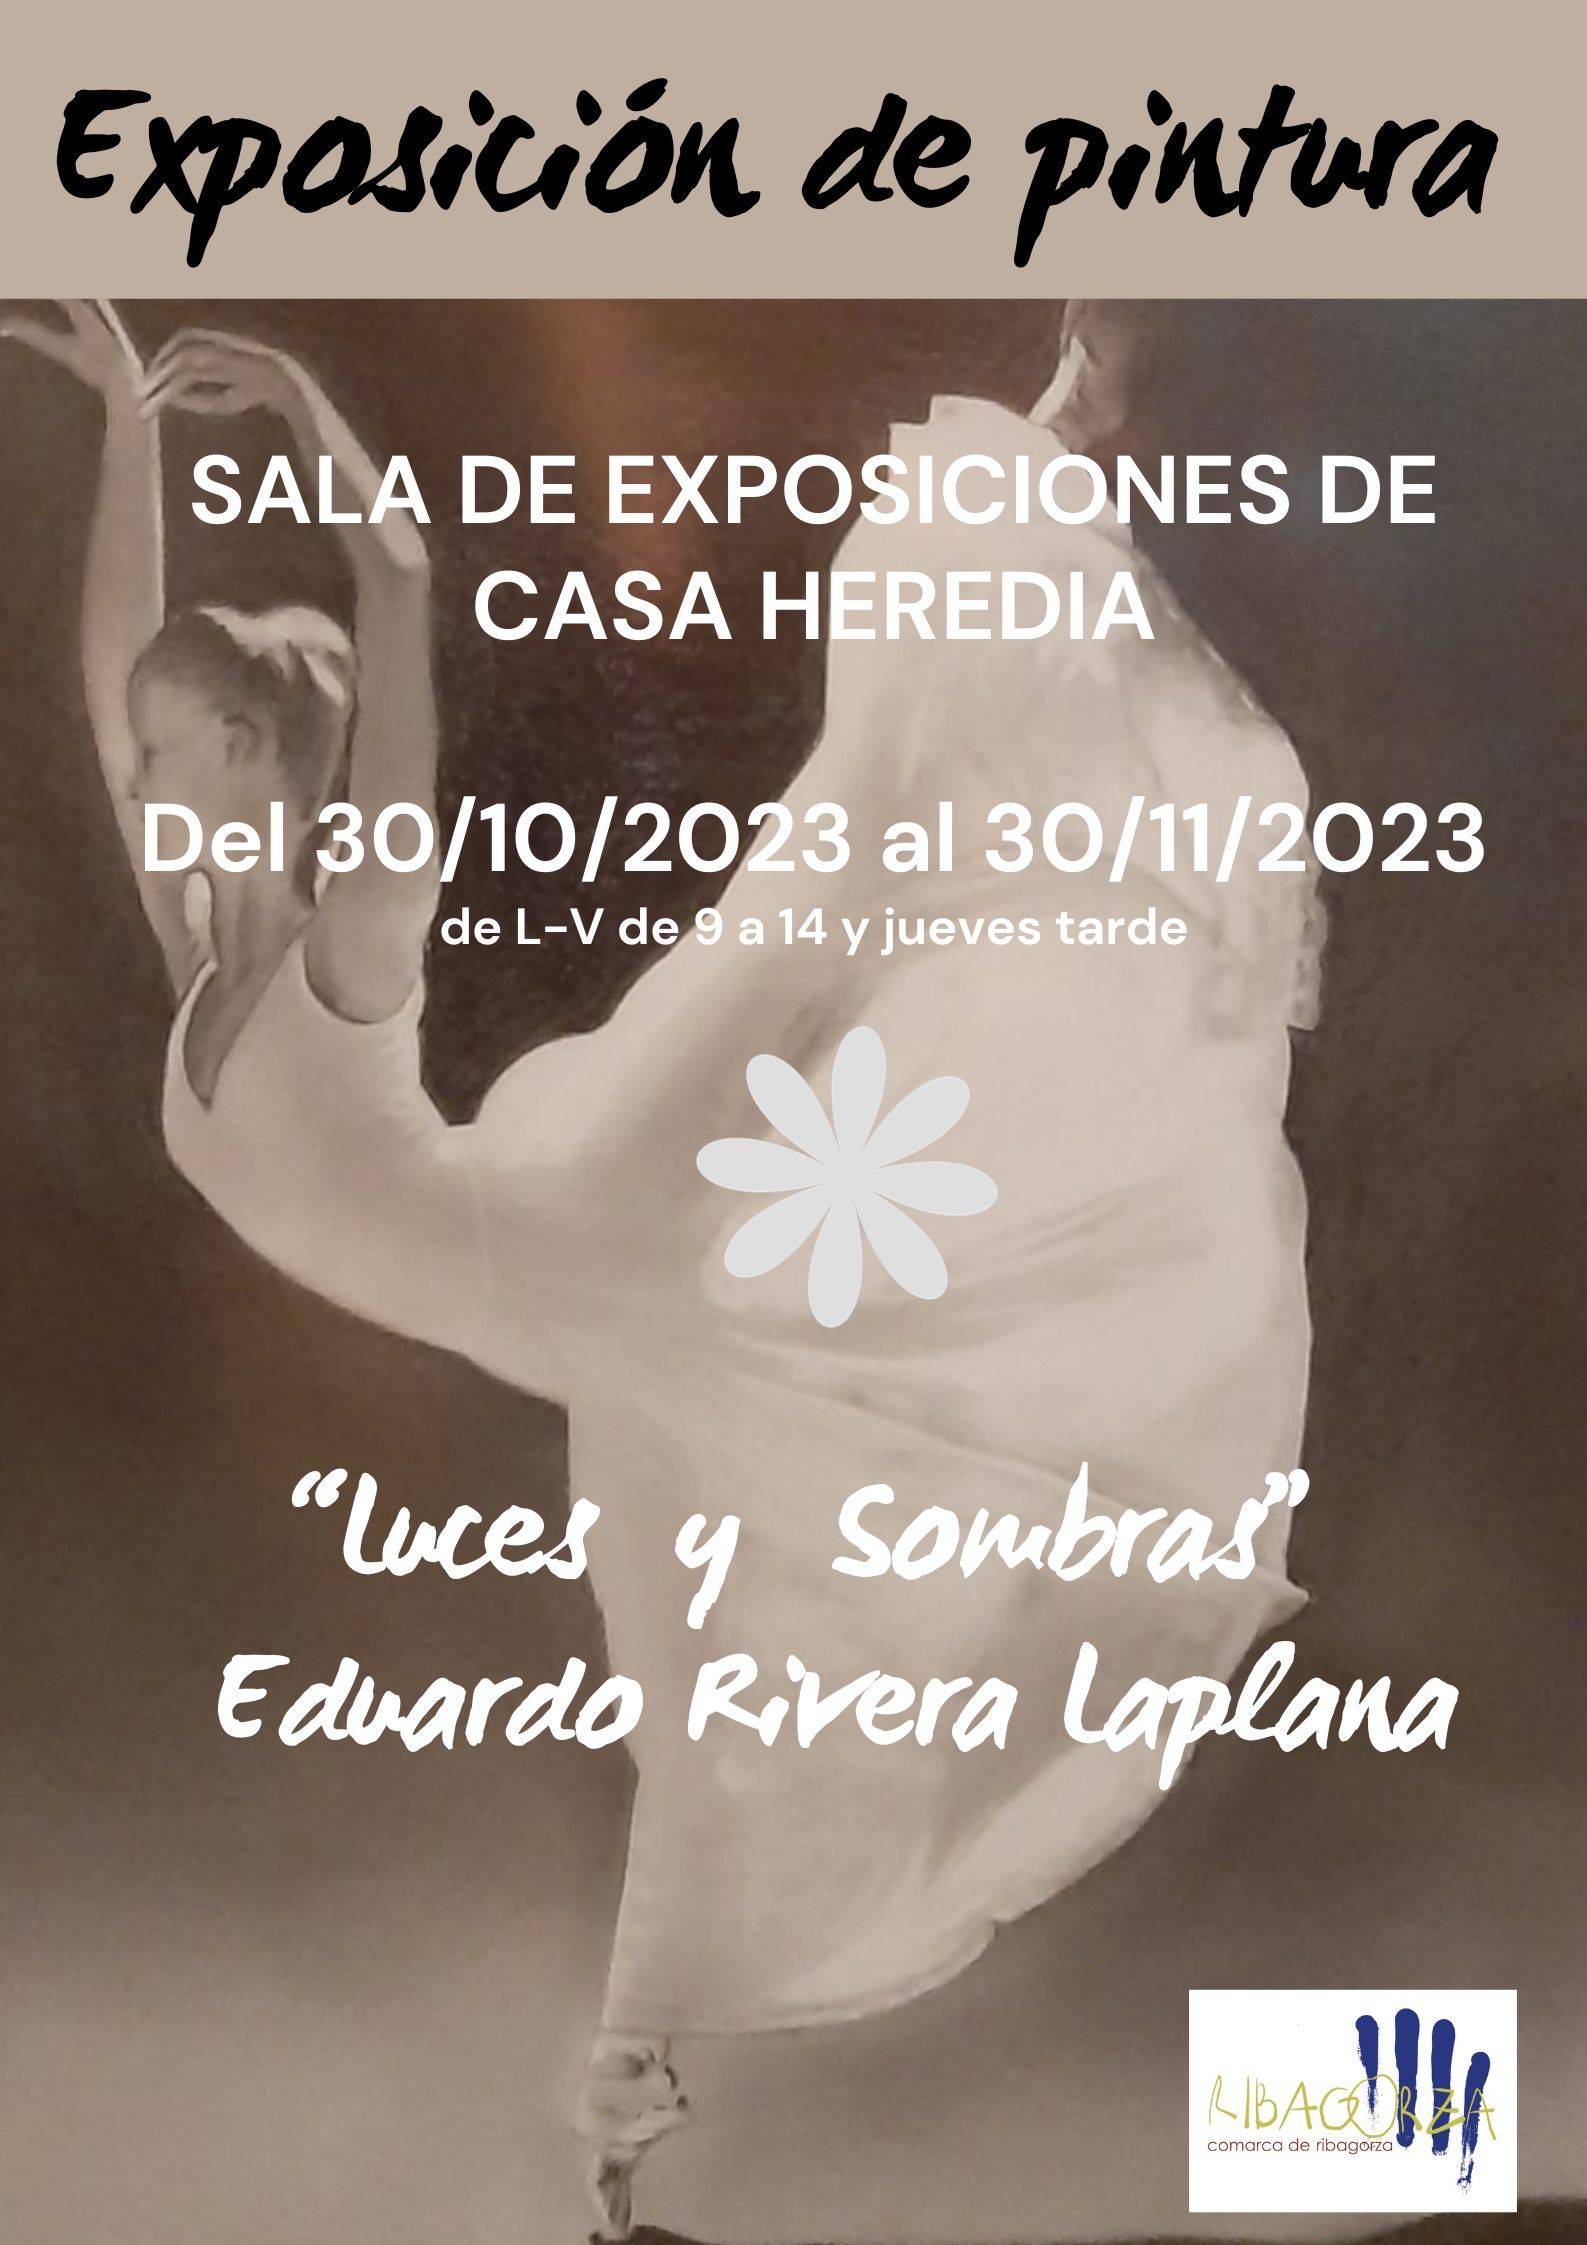 Exposición de Pintura "Luces y sombras" de Eduardo Rivera